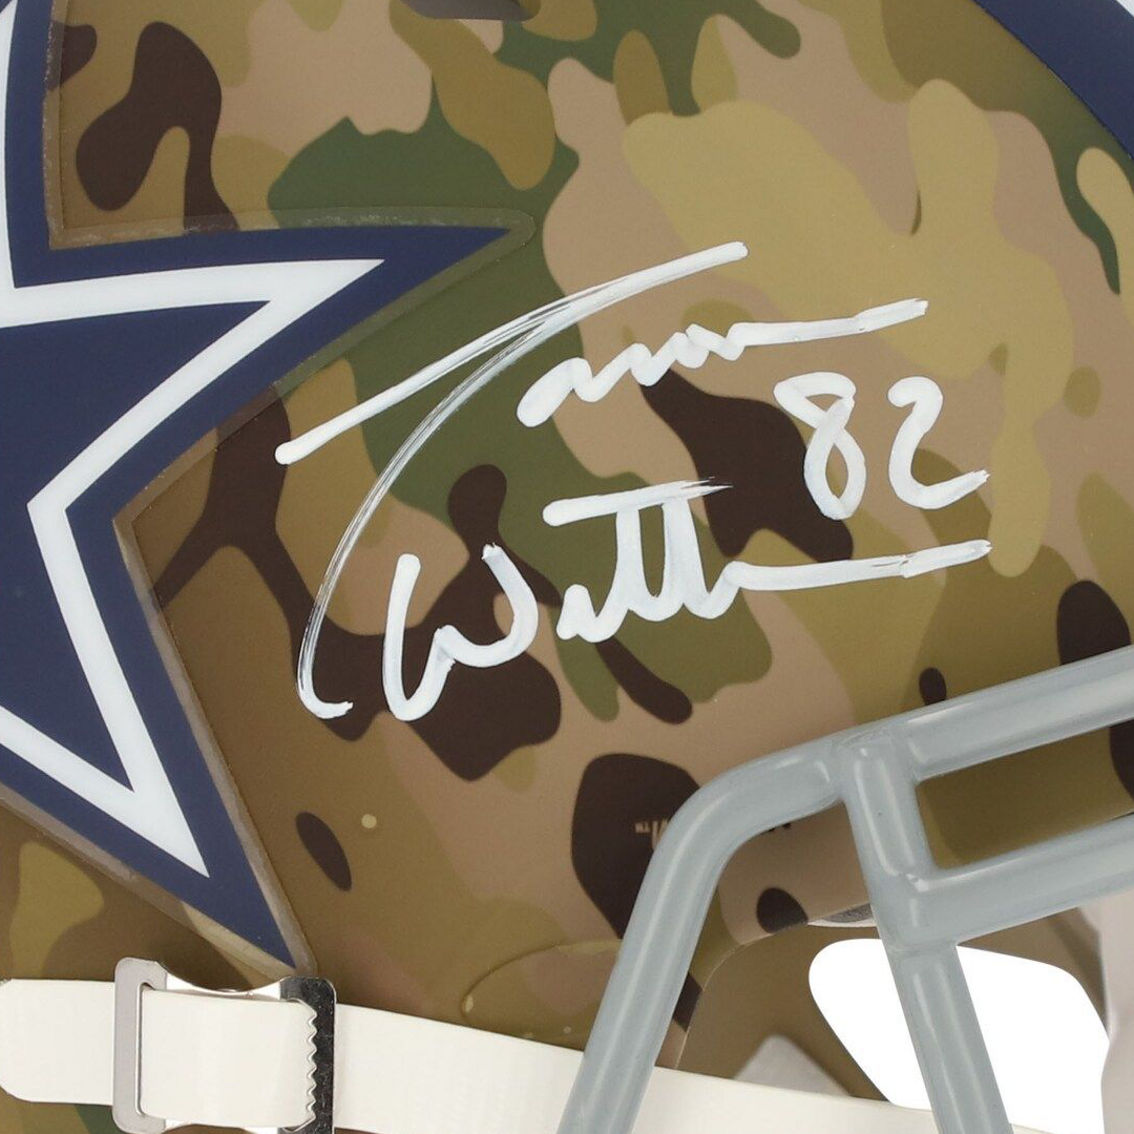 Fanatics Authentic Jason Witten Dallas Cowboys Autographed Riddell Camo Alternate Speed Authentic Helmet - Image 4 of 4